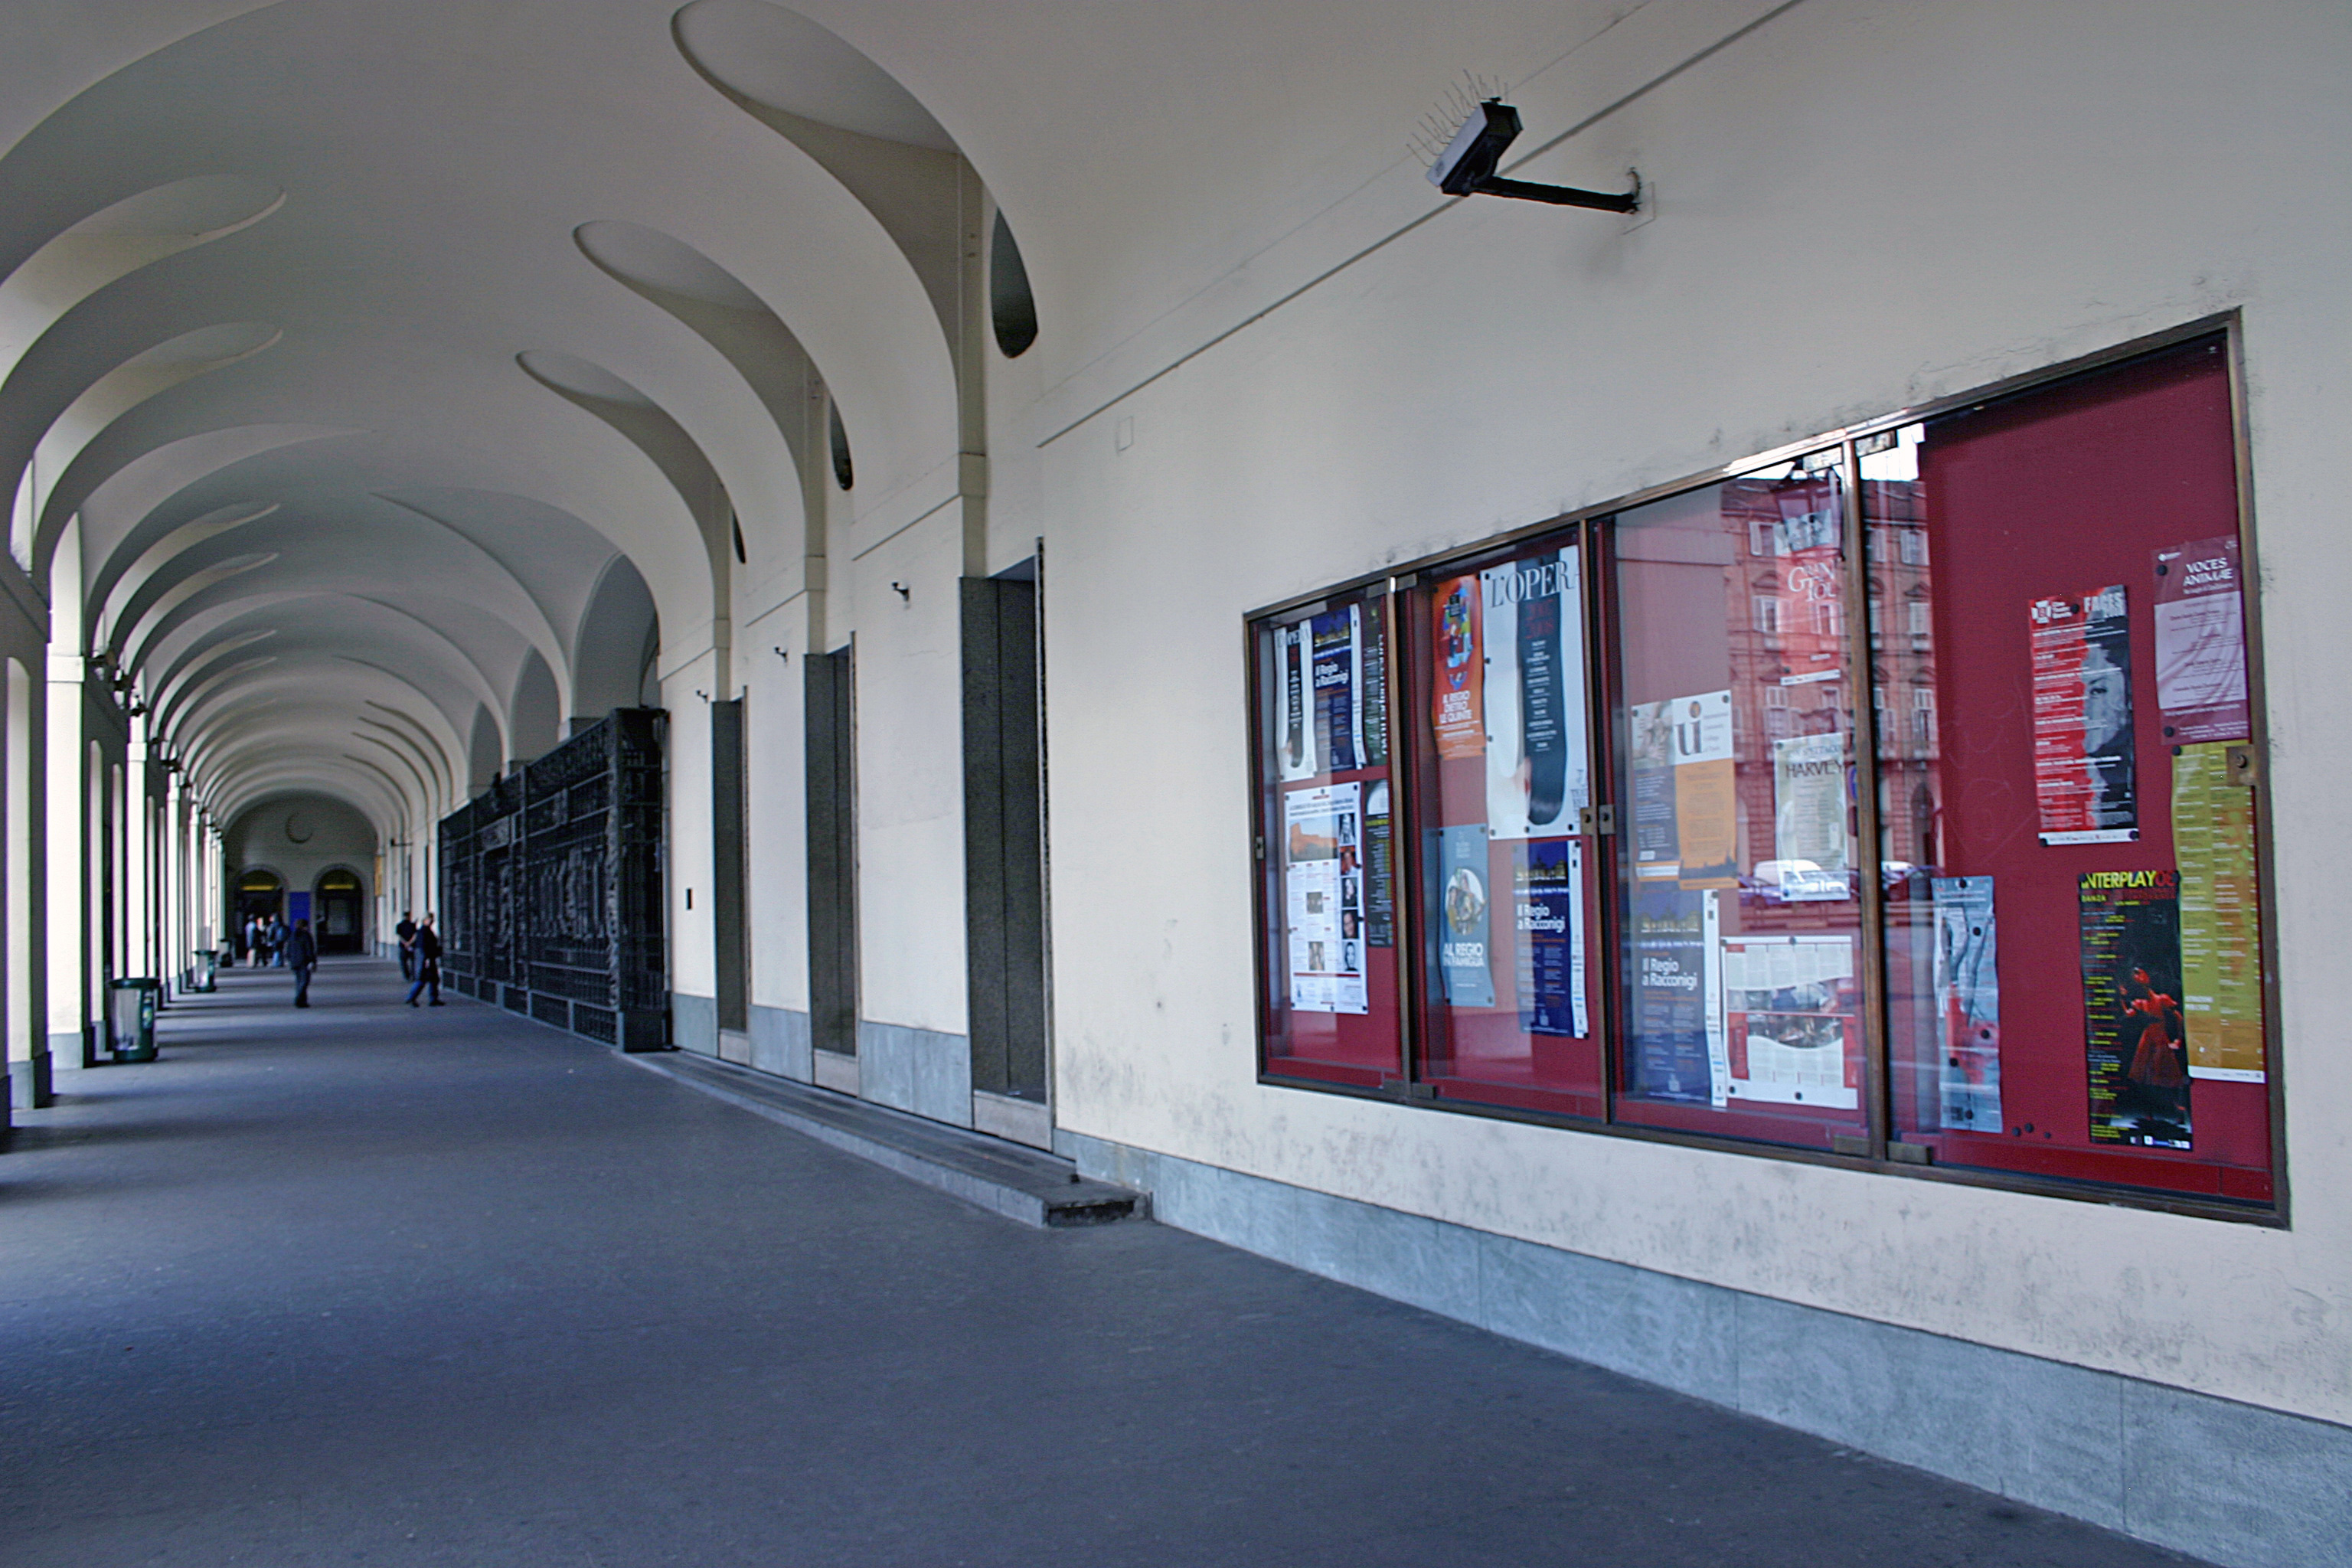 Porticos in front of the theatre entrance, in piazza Castello